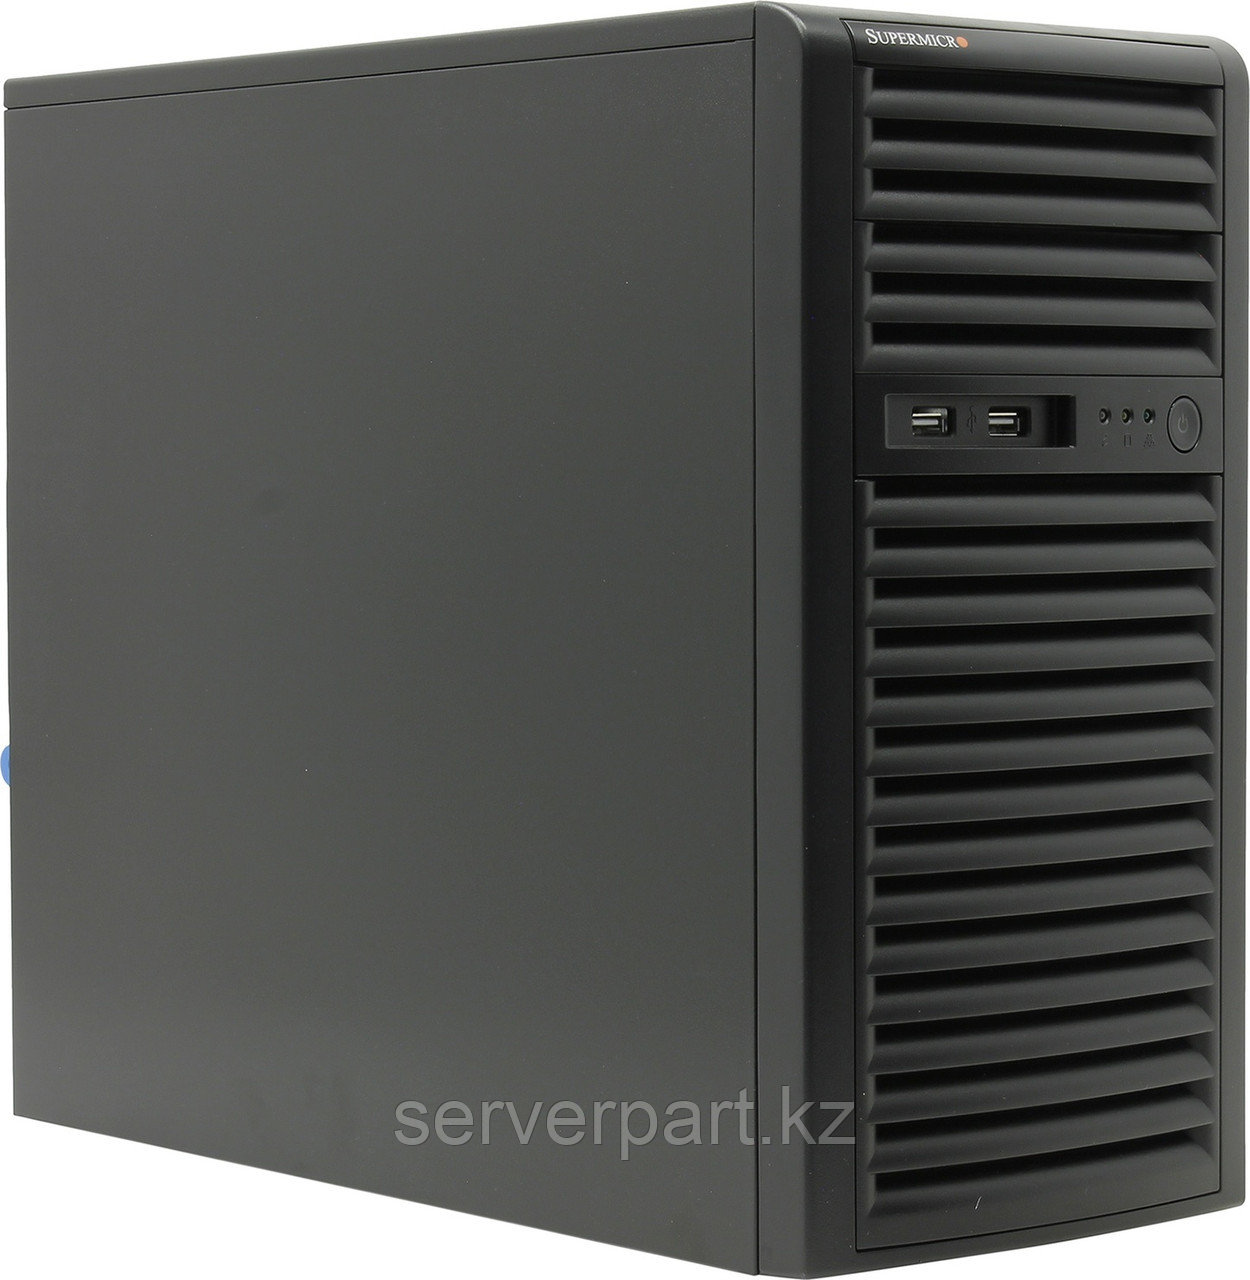 Сервер Supermicro 5039D Tower/4-core intel xeon E3-1220v6 3GHz/48GB UDIMM nECC/1x240GB SSD RI Hyb, фото 1